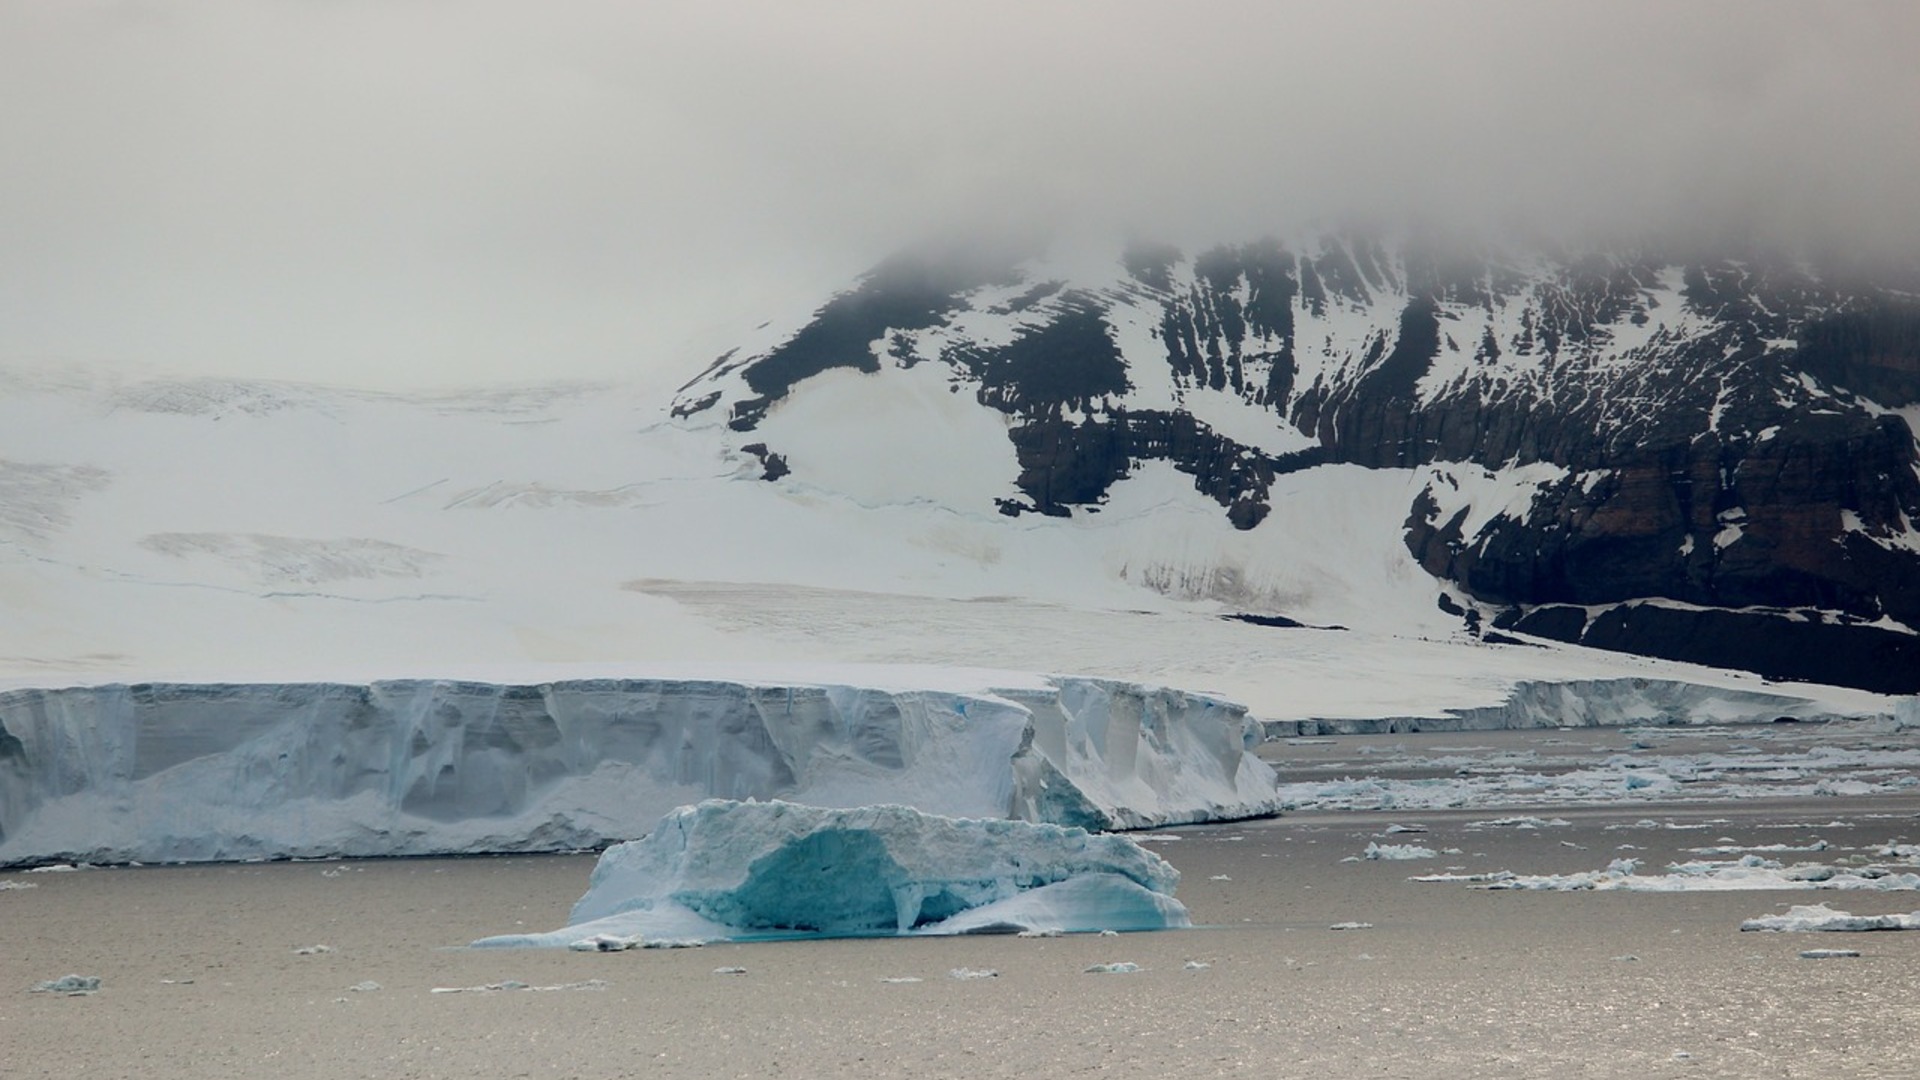 Survey of the Antarctic ice sheet grounding line